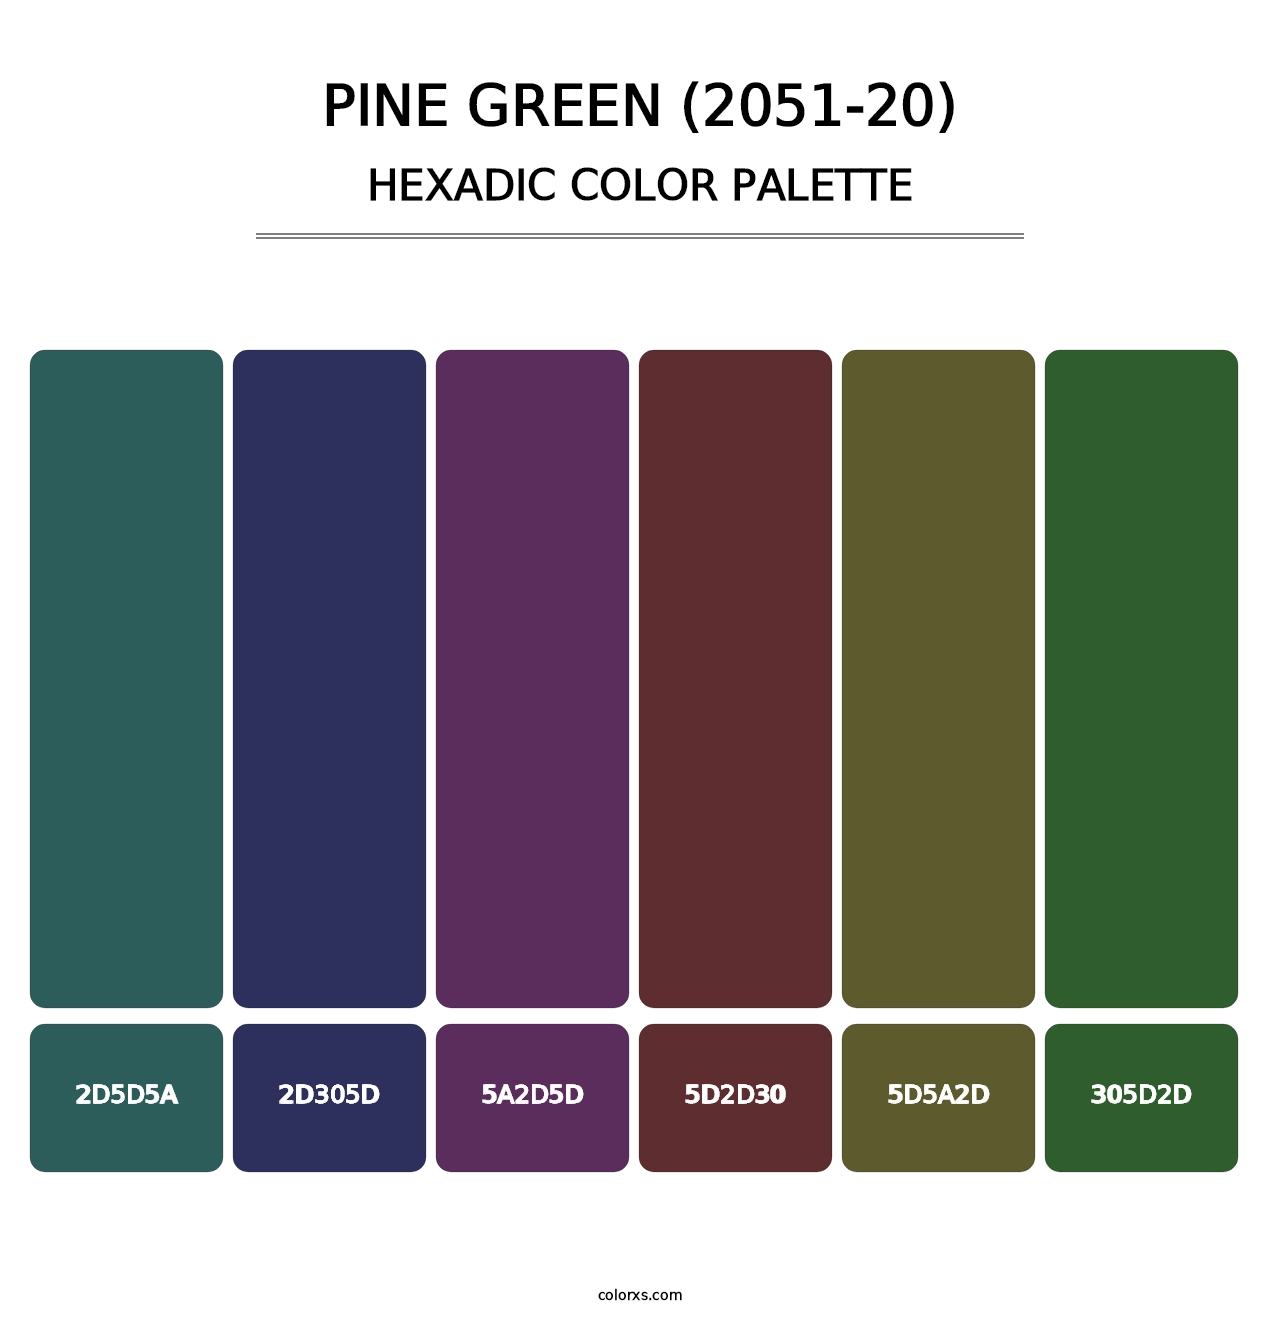 Pine Green (2051-20) - Hexadic Color Palette